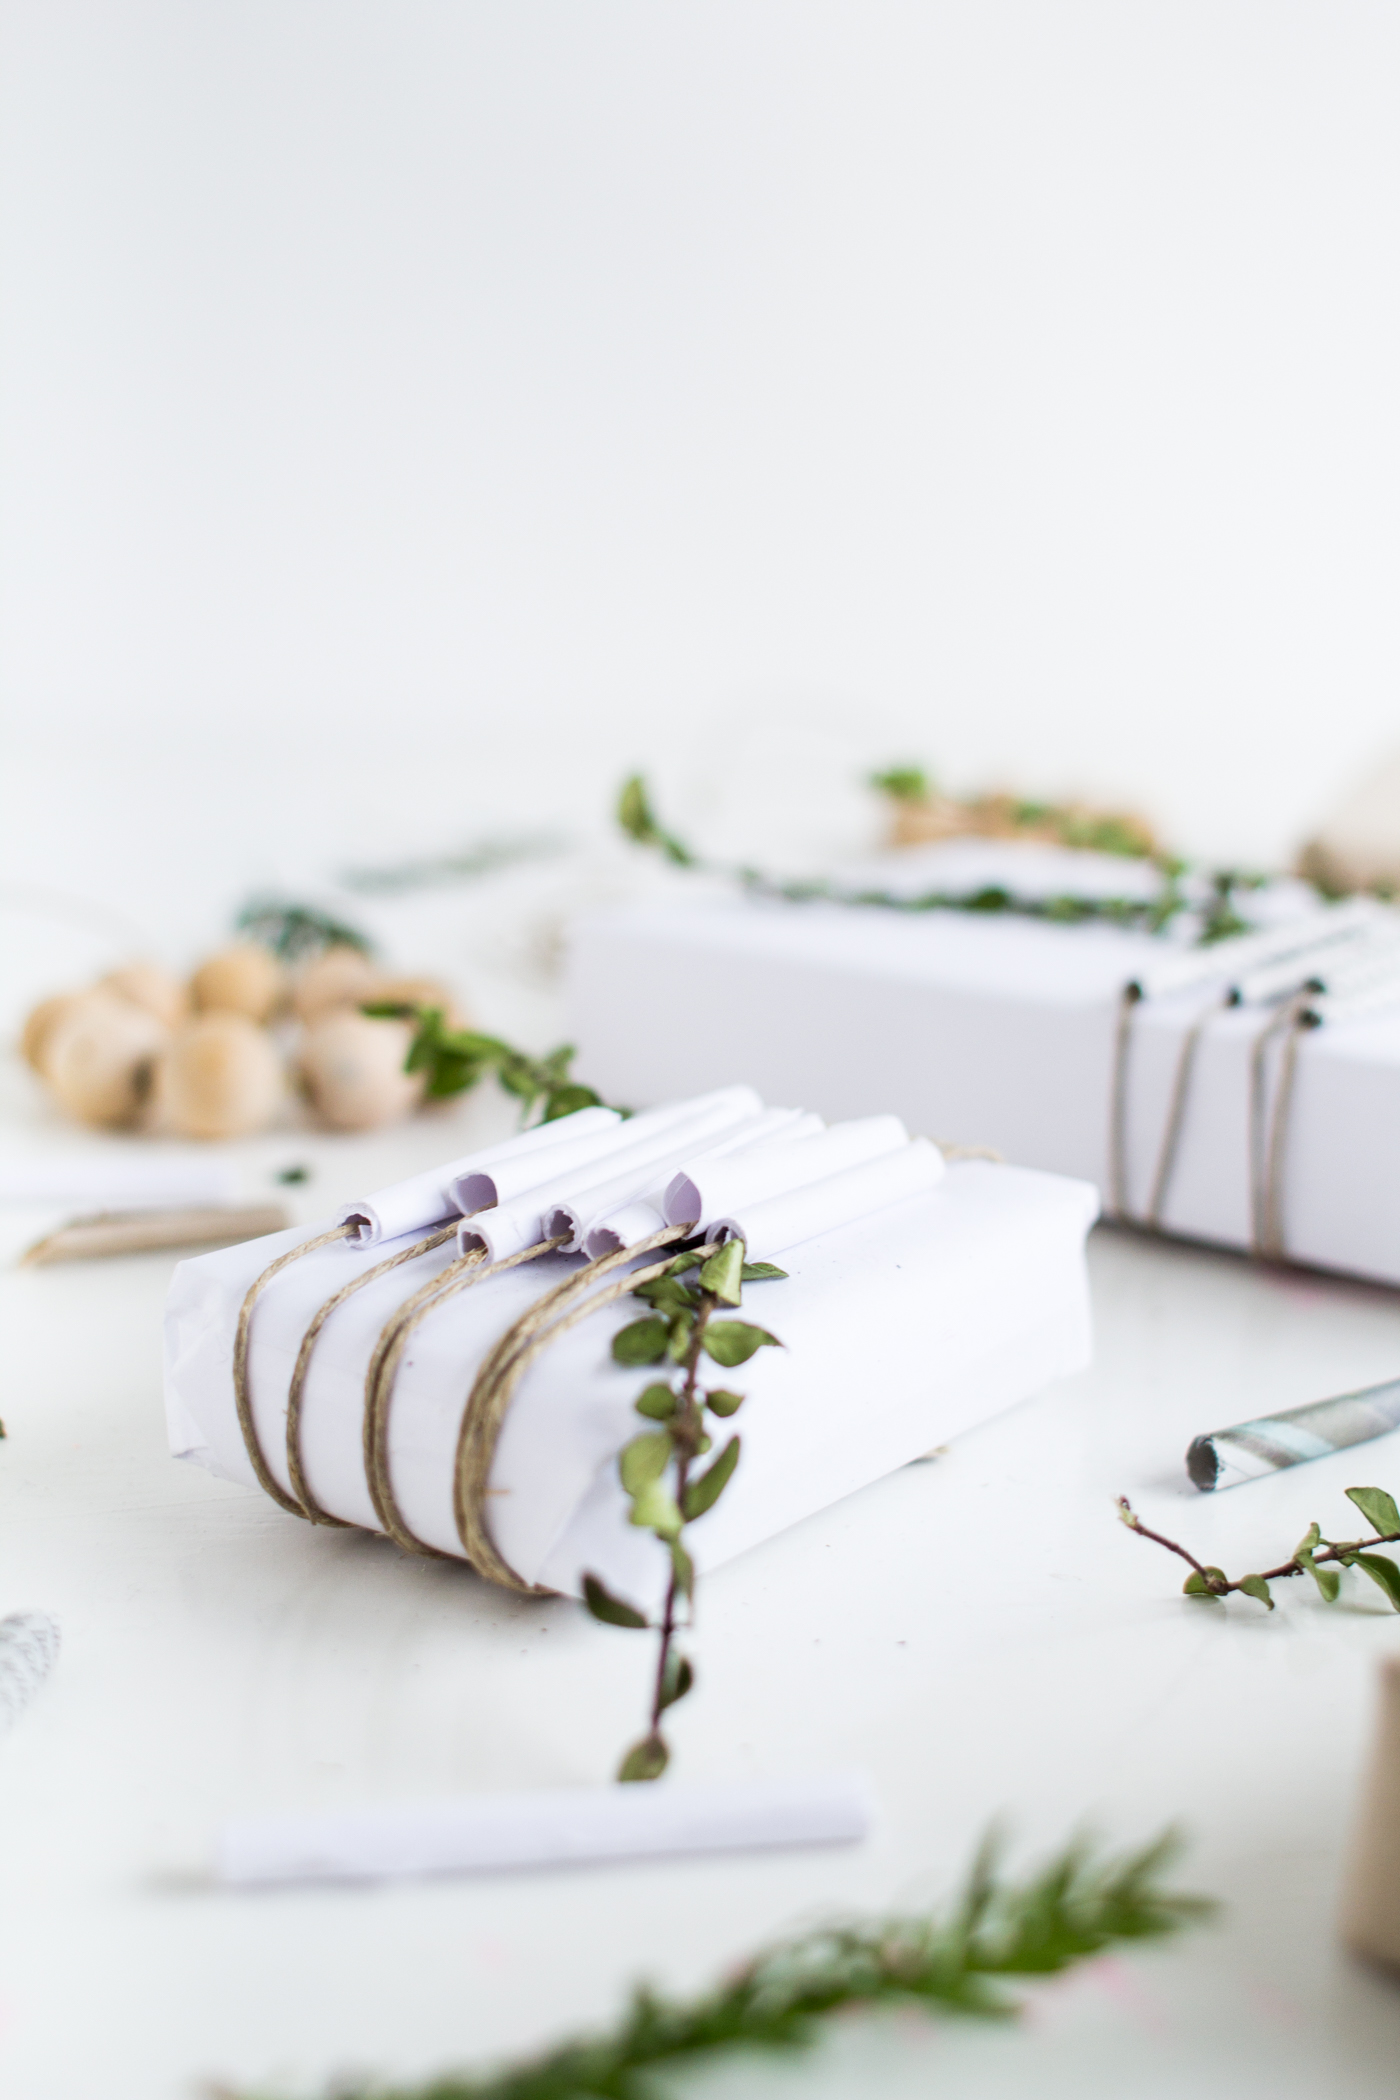 DIY Paper Straw Gift Wrap Toppers | @fallfordiy